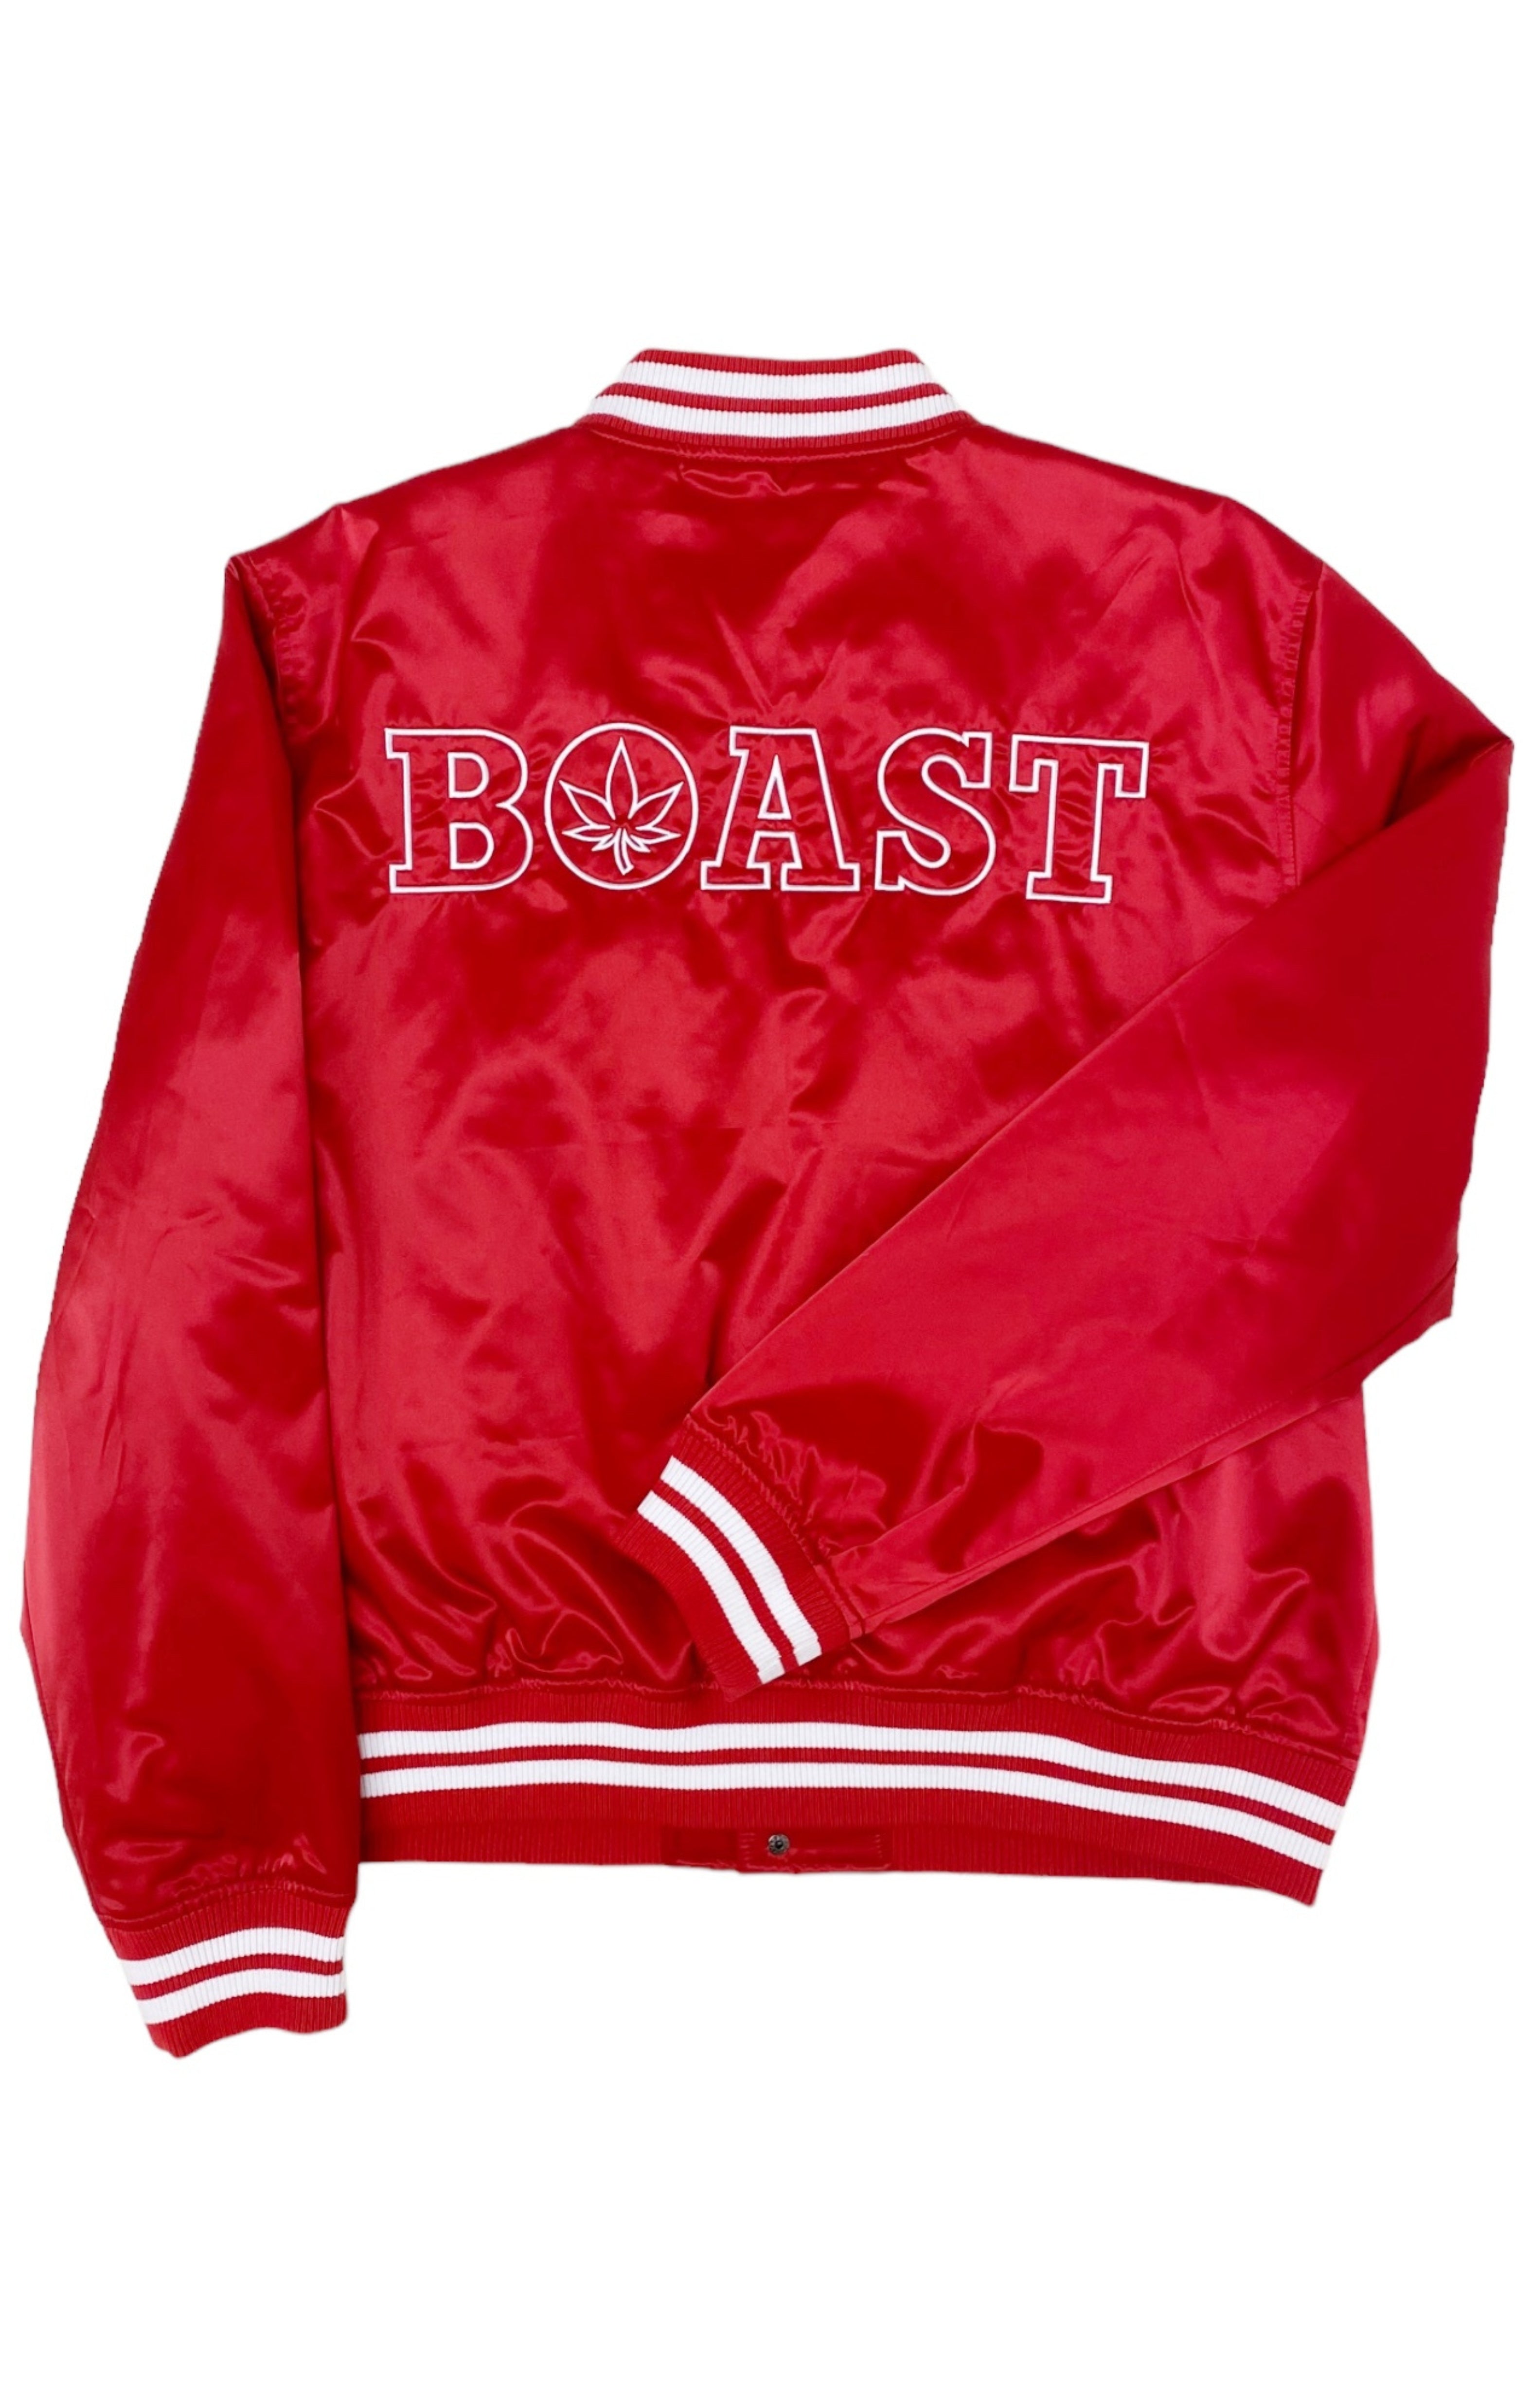 BOAST (RARE) Jacket Size: 2XL